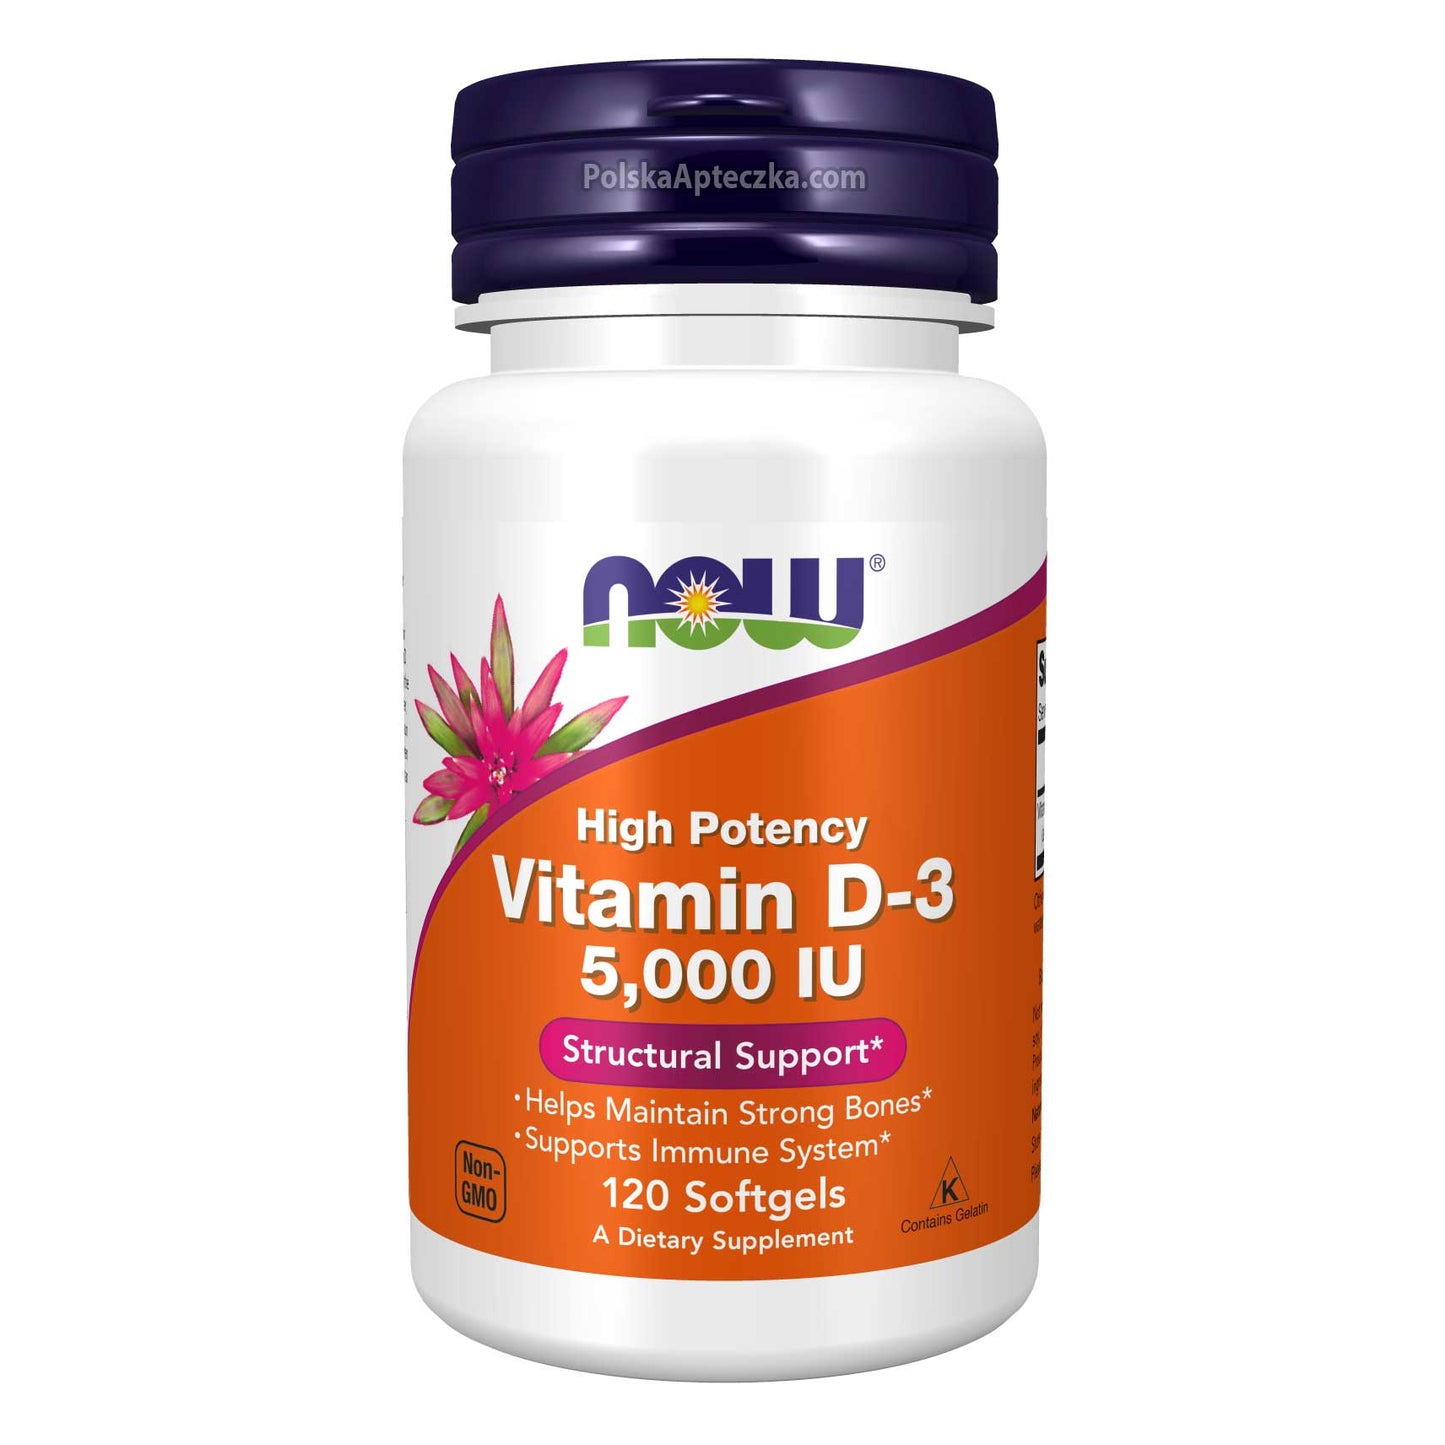 vitamin d-3 5,000 iu